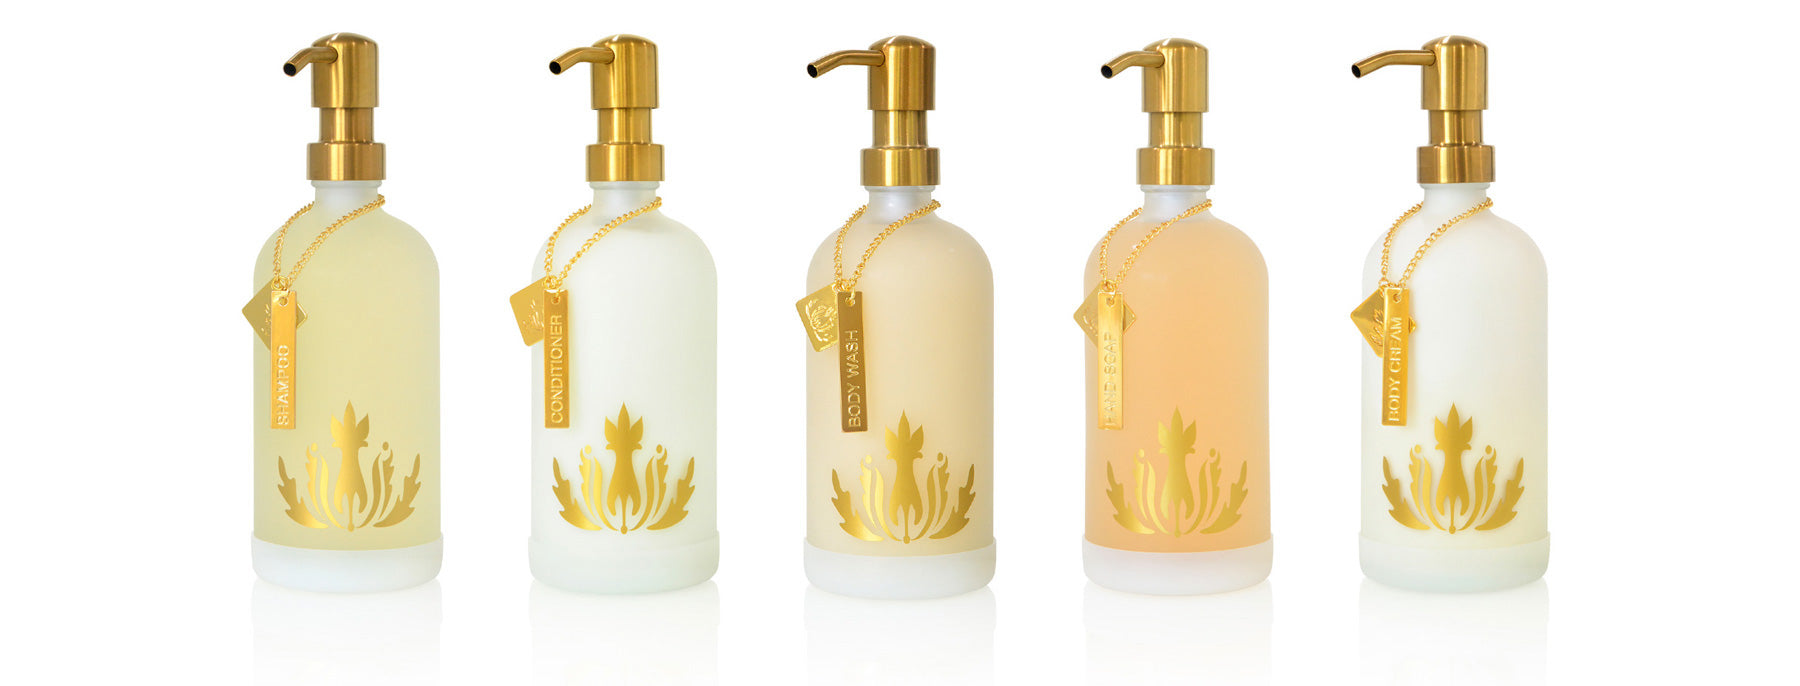 Organic botanical glass hospitality bottles for luxury amenities